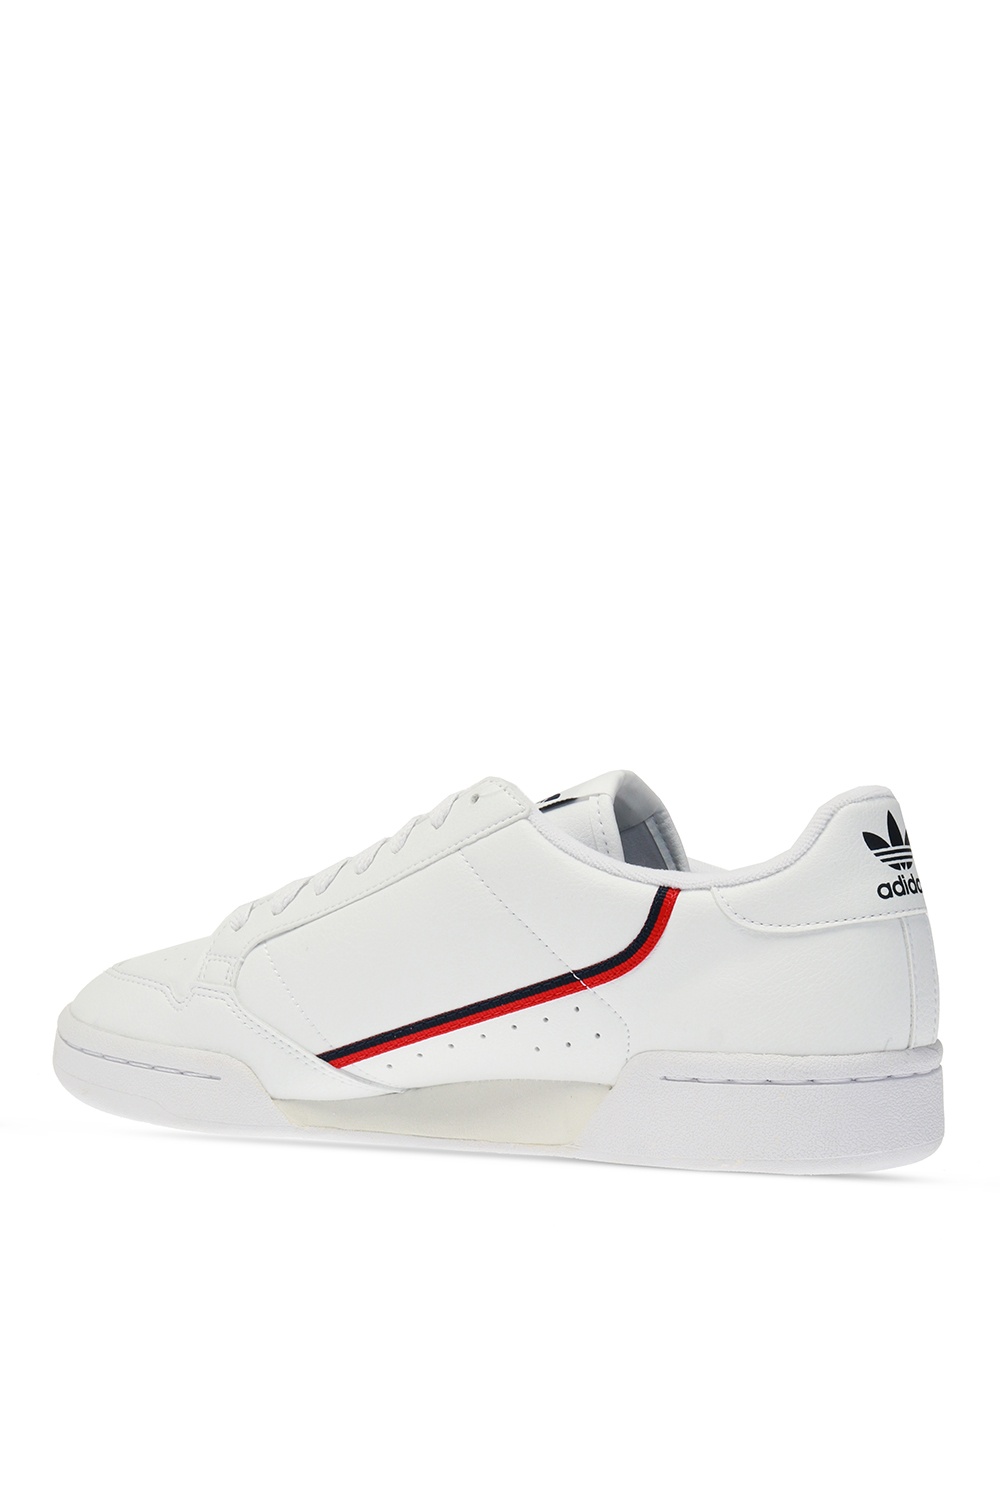 ADIDAS Originals \'Continental 80\' sneakers | Men\'s Shoes | Vitkac